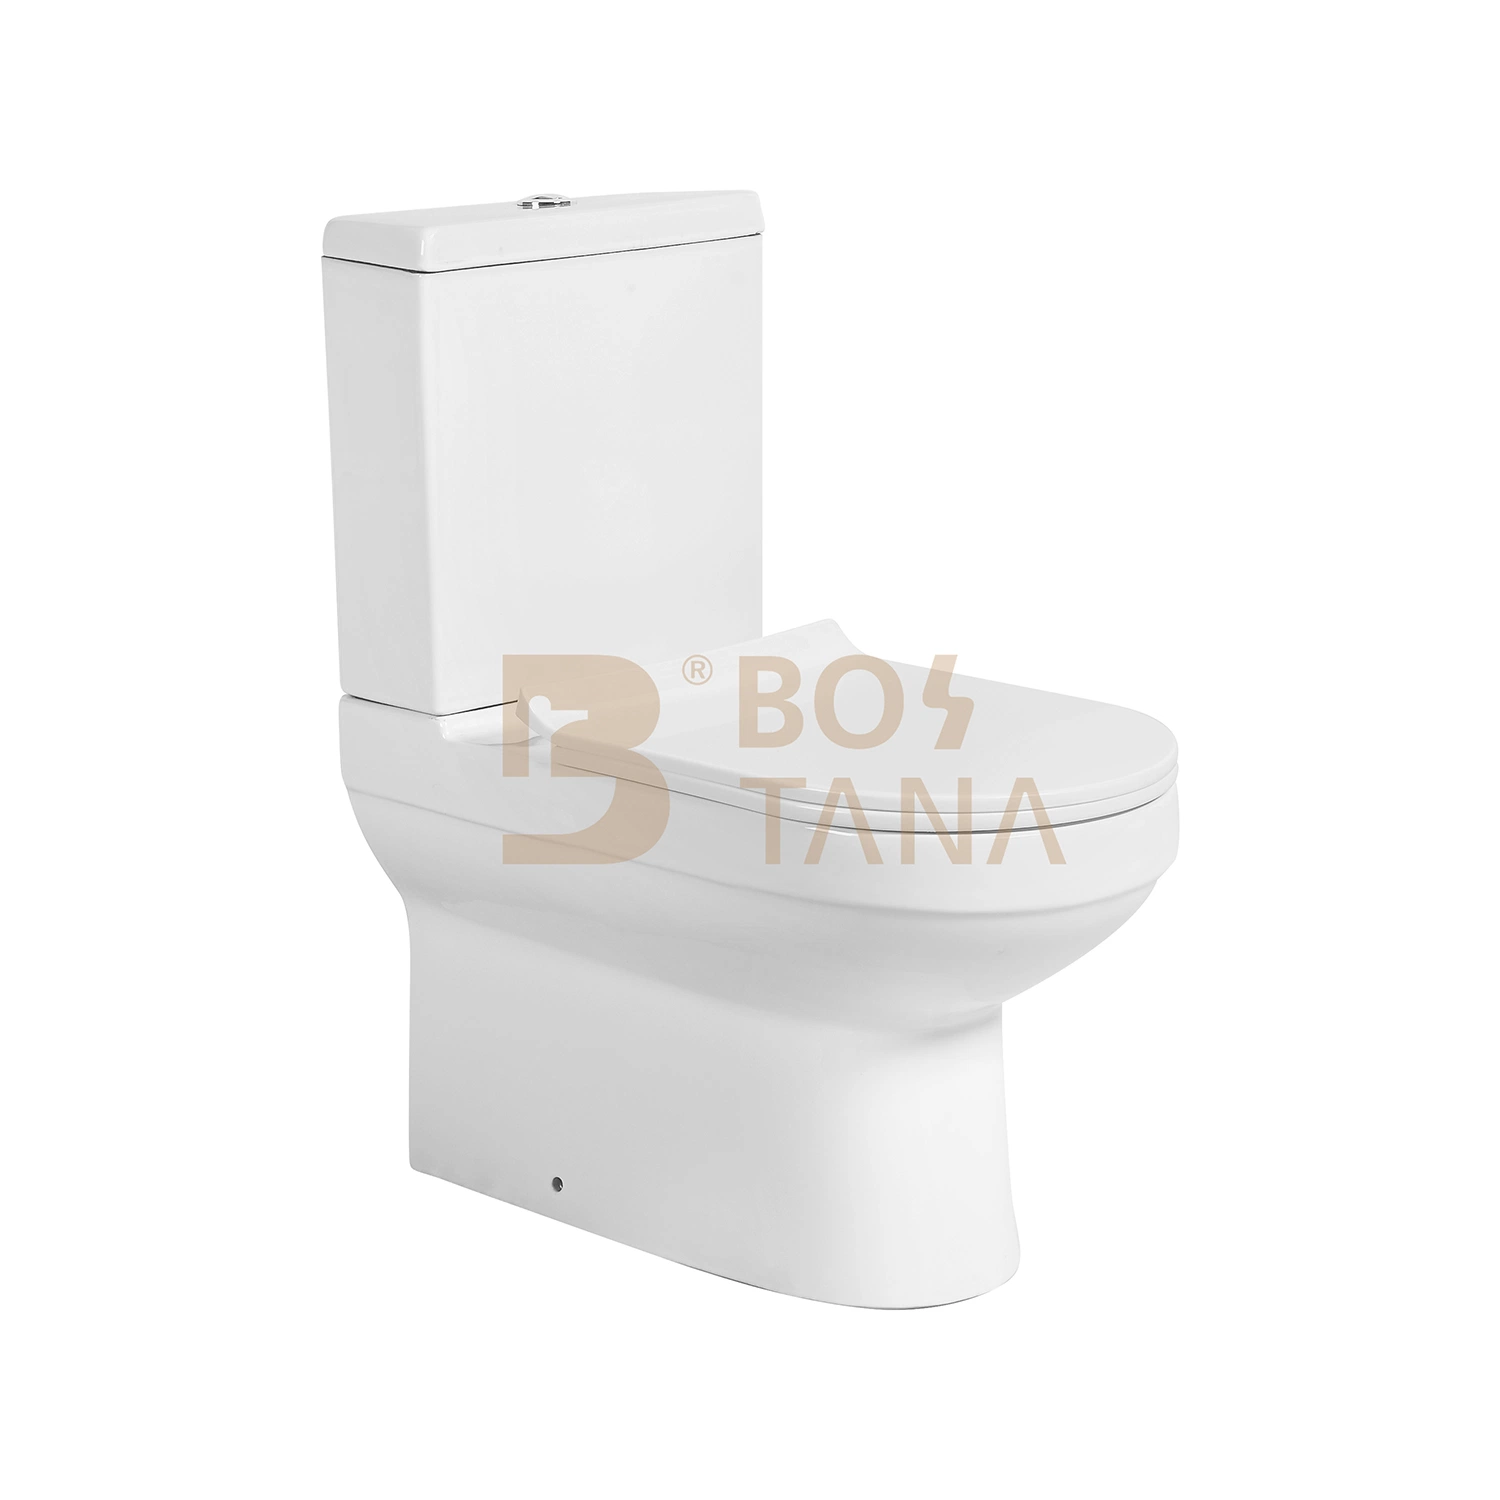 Badezimmer-Toiletten-hohe kosteneffektive Toilette mit UF/PP Sitzdeckel Sanitaryware Toilette